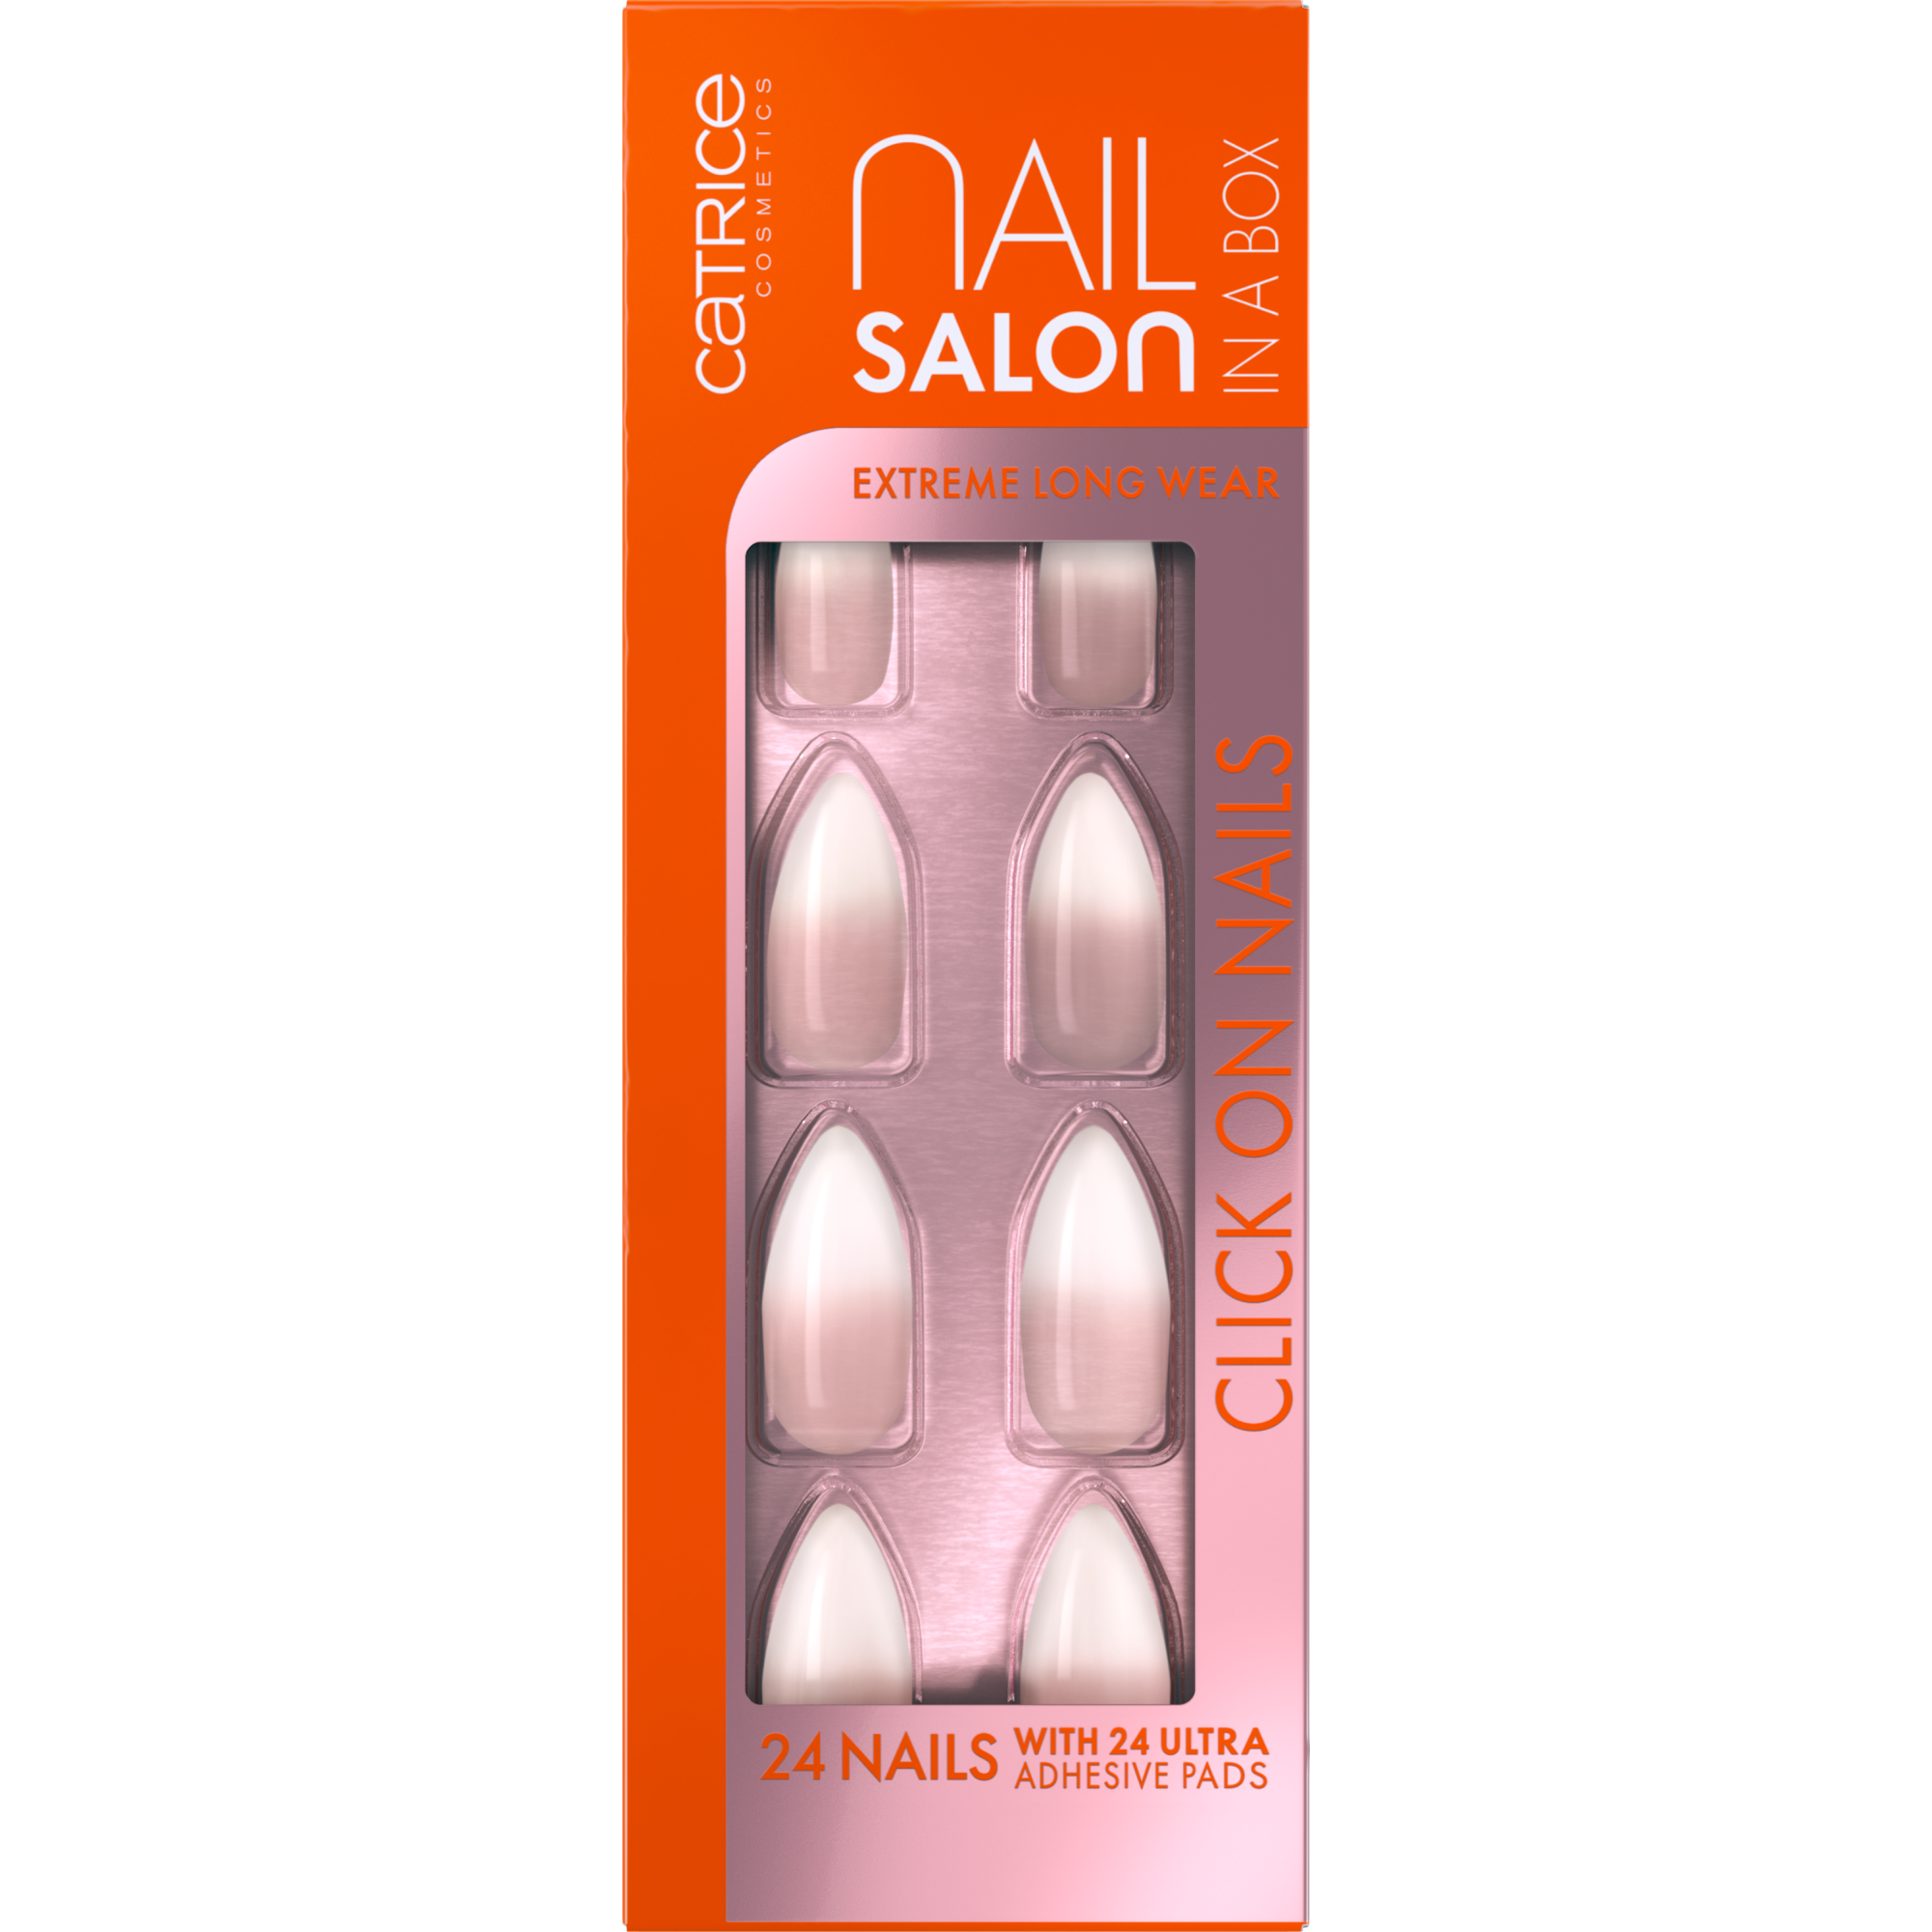 Nail Salon in a Box Click on Nails